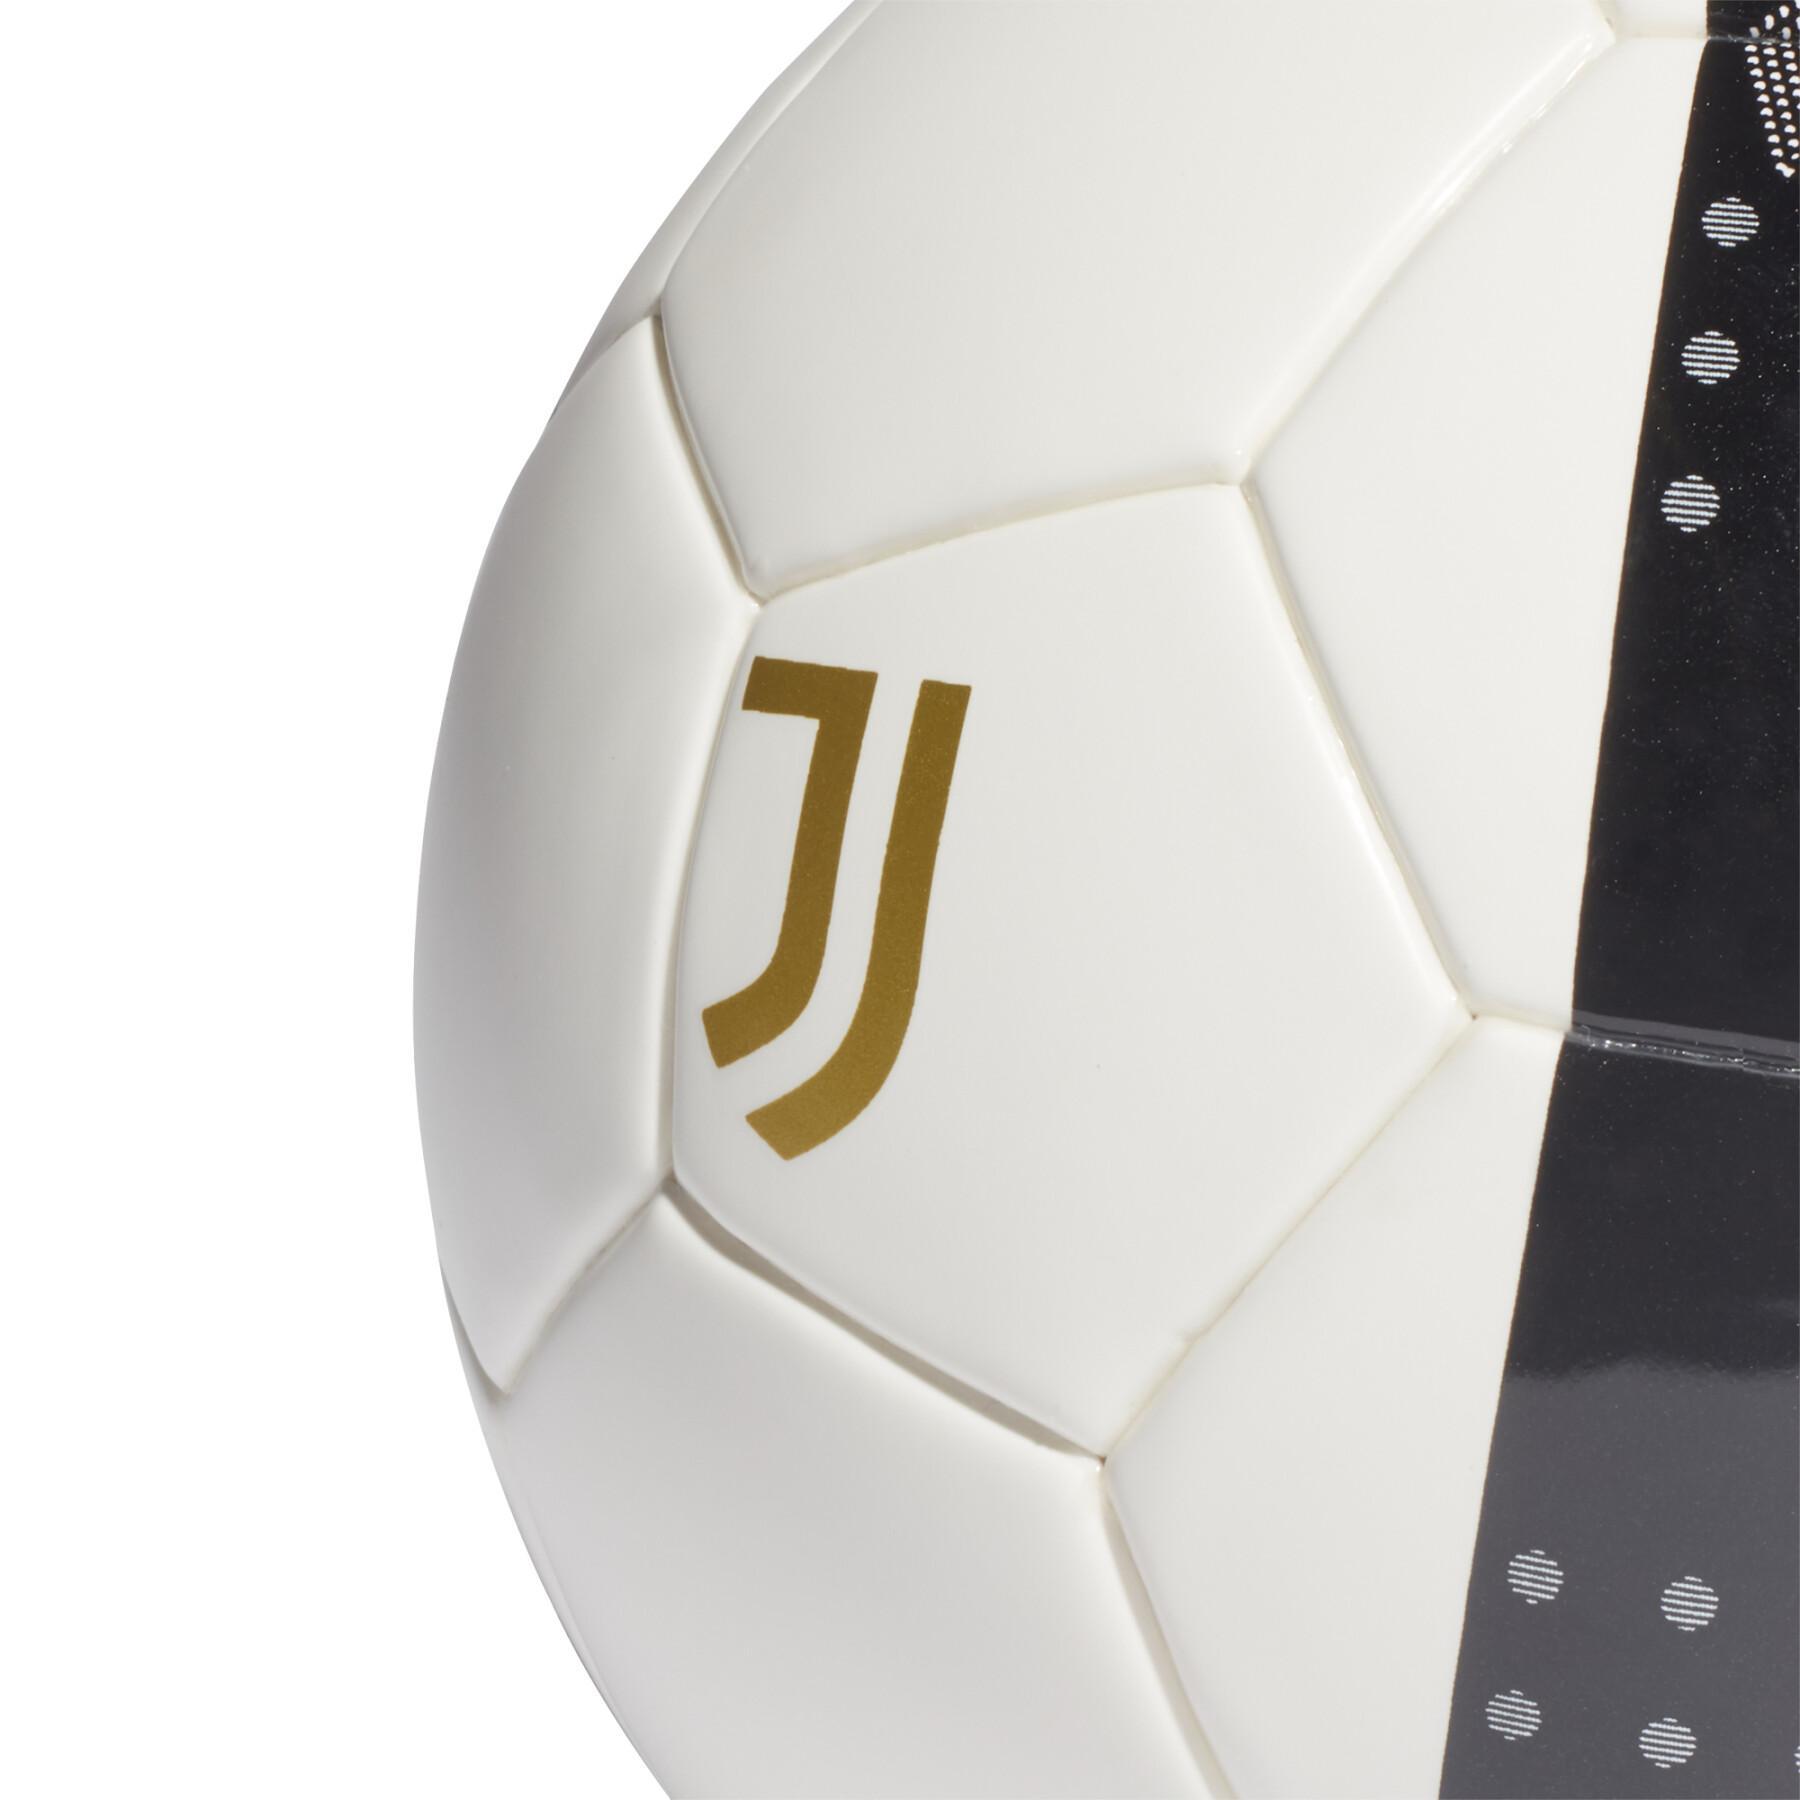 Mini balón Juventus